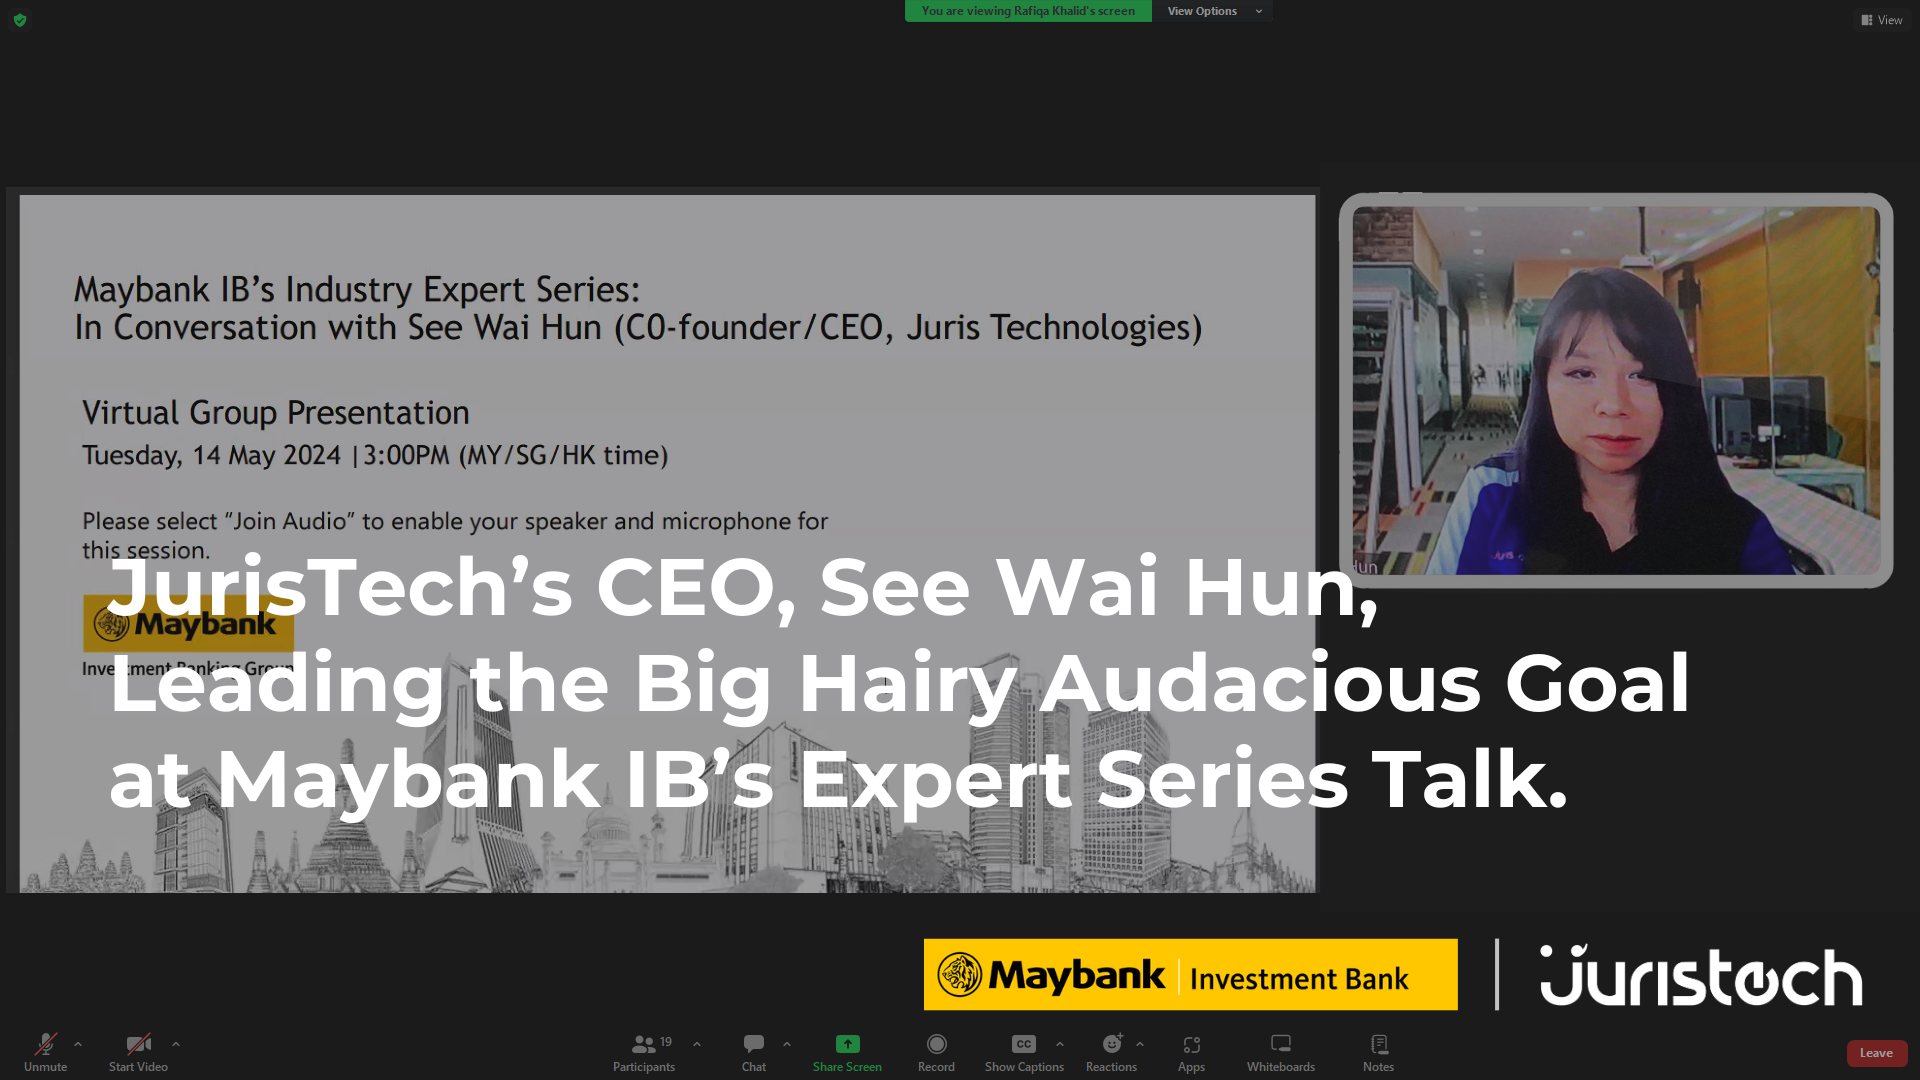 [Headline] JurisTech’s CEO, See Wai Hun, Leading the Big Hairy Audacious Goal at Maybank IB’s Expert Series Talk Banner Image